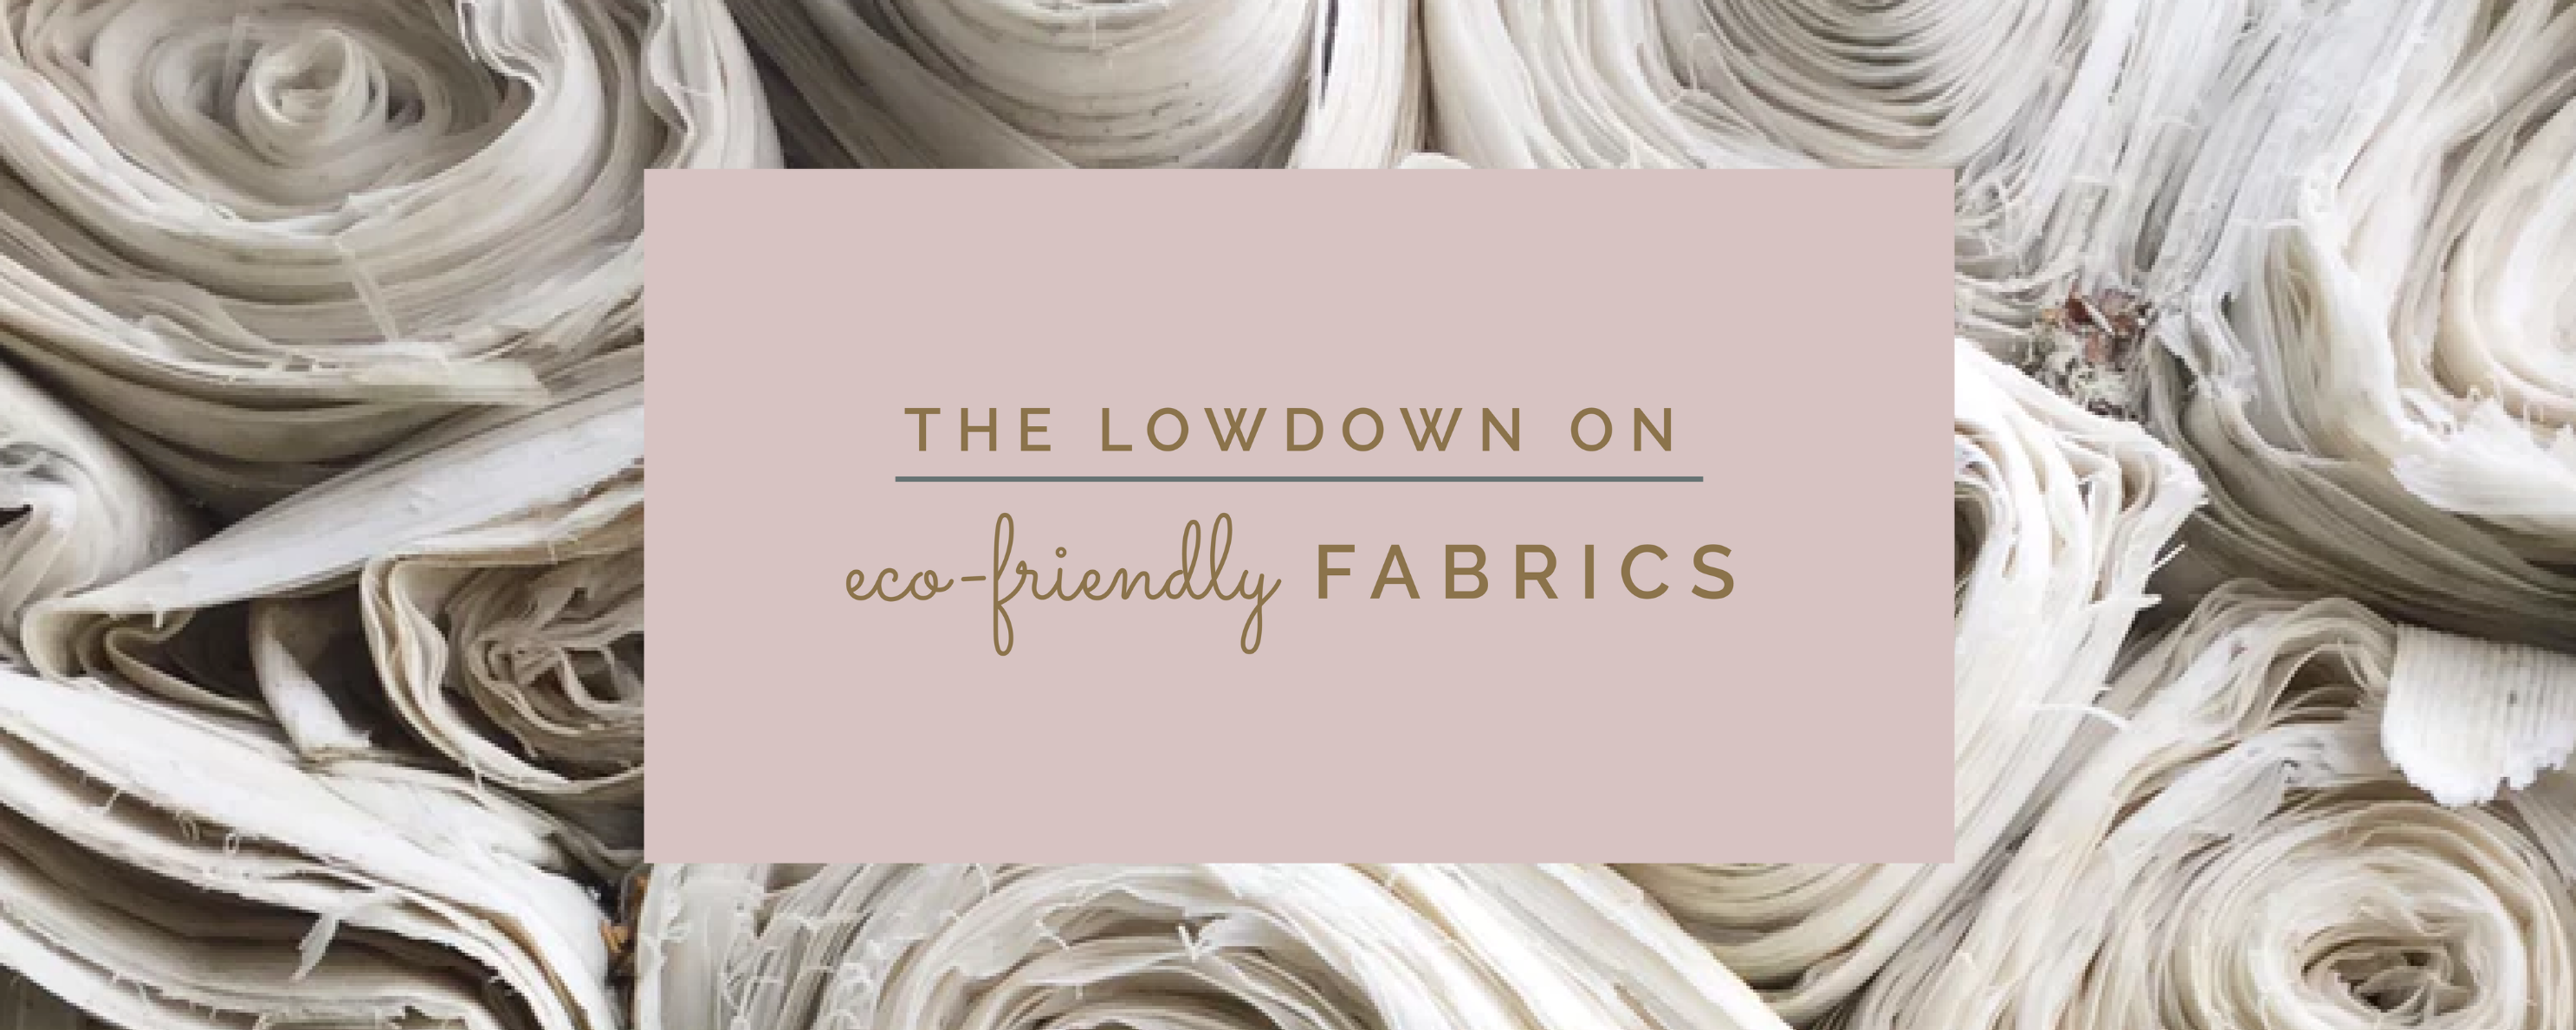 The Lowdown on Eco Friendly Fabrics at Azura Bay